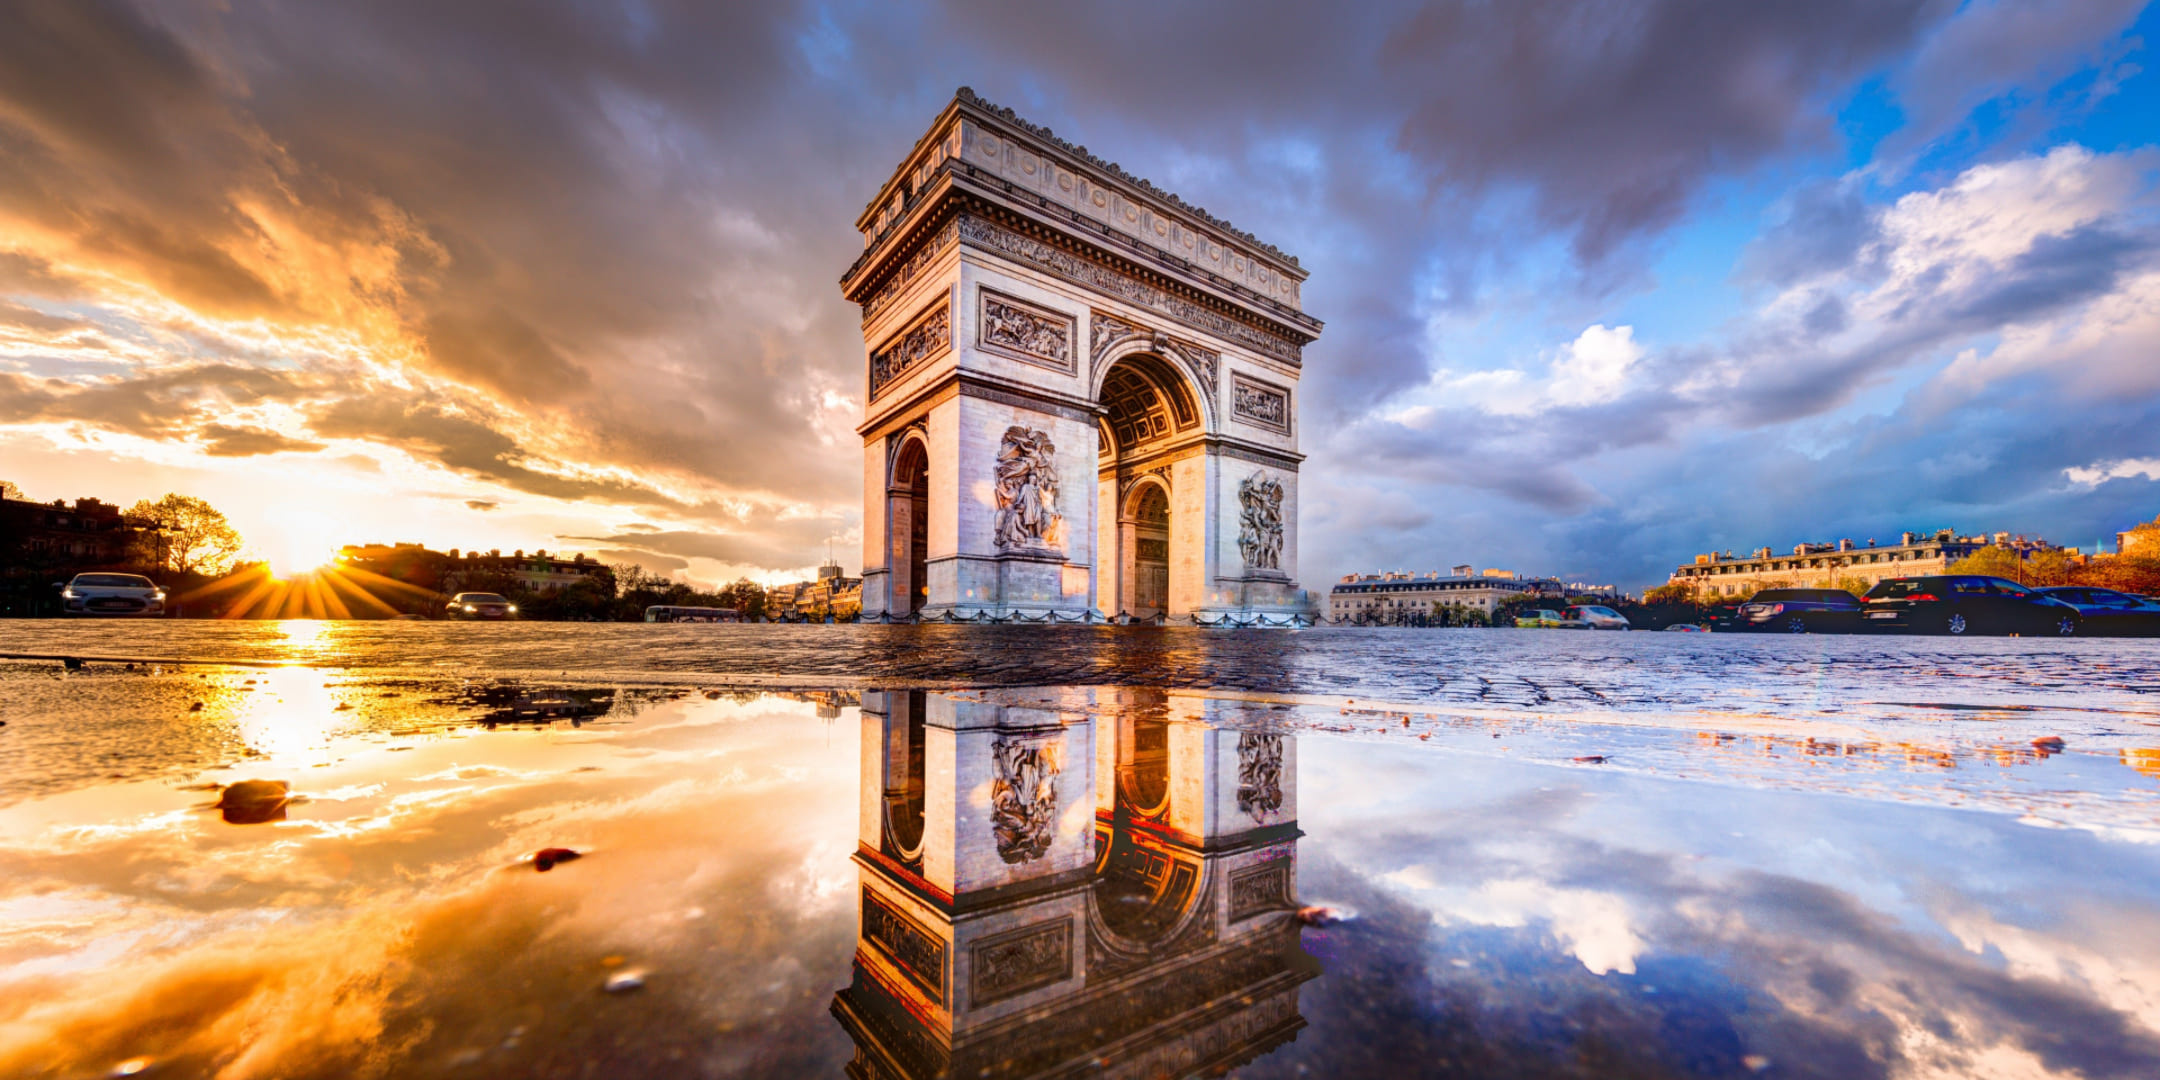 Arc de Triomphe, Best wallpapers, Download in 2021, Top quality images, 2160x1080 Dual Screen Desktop